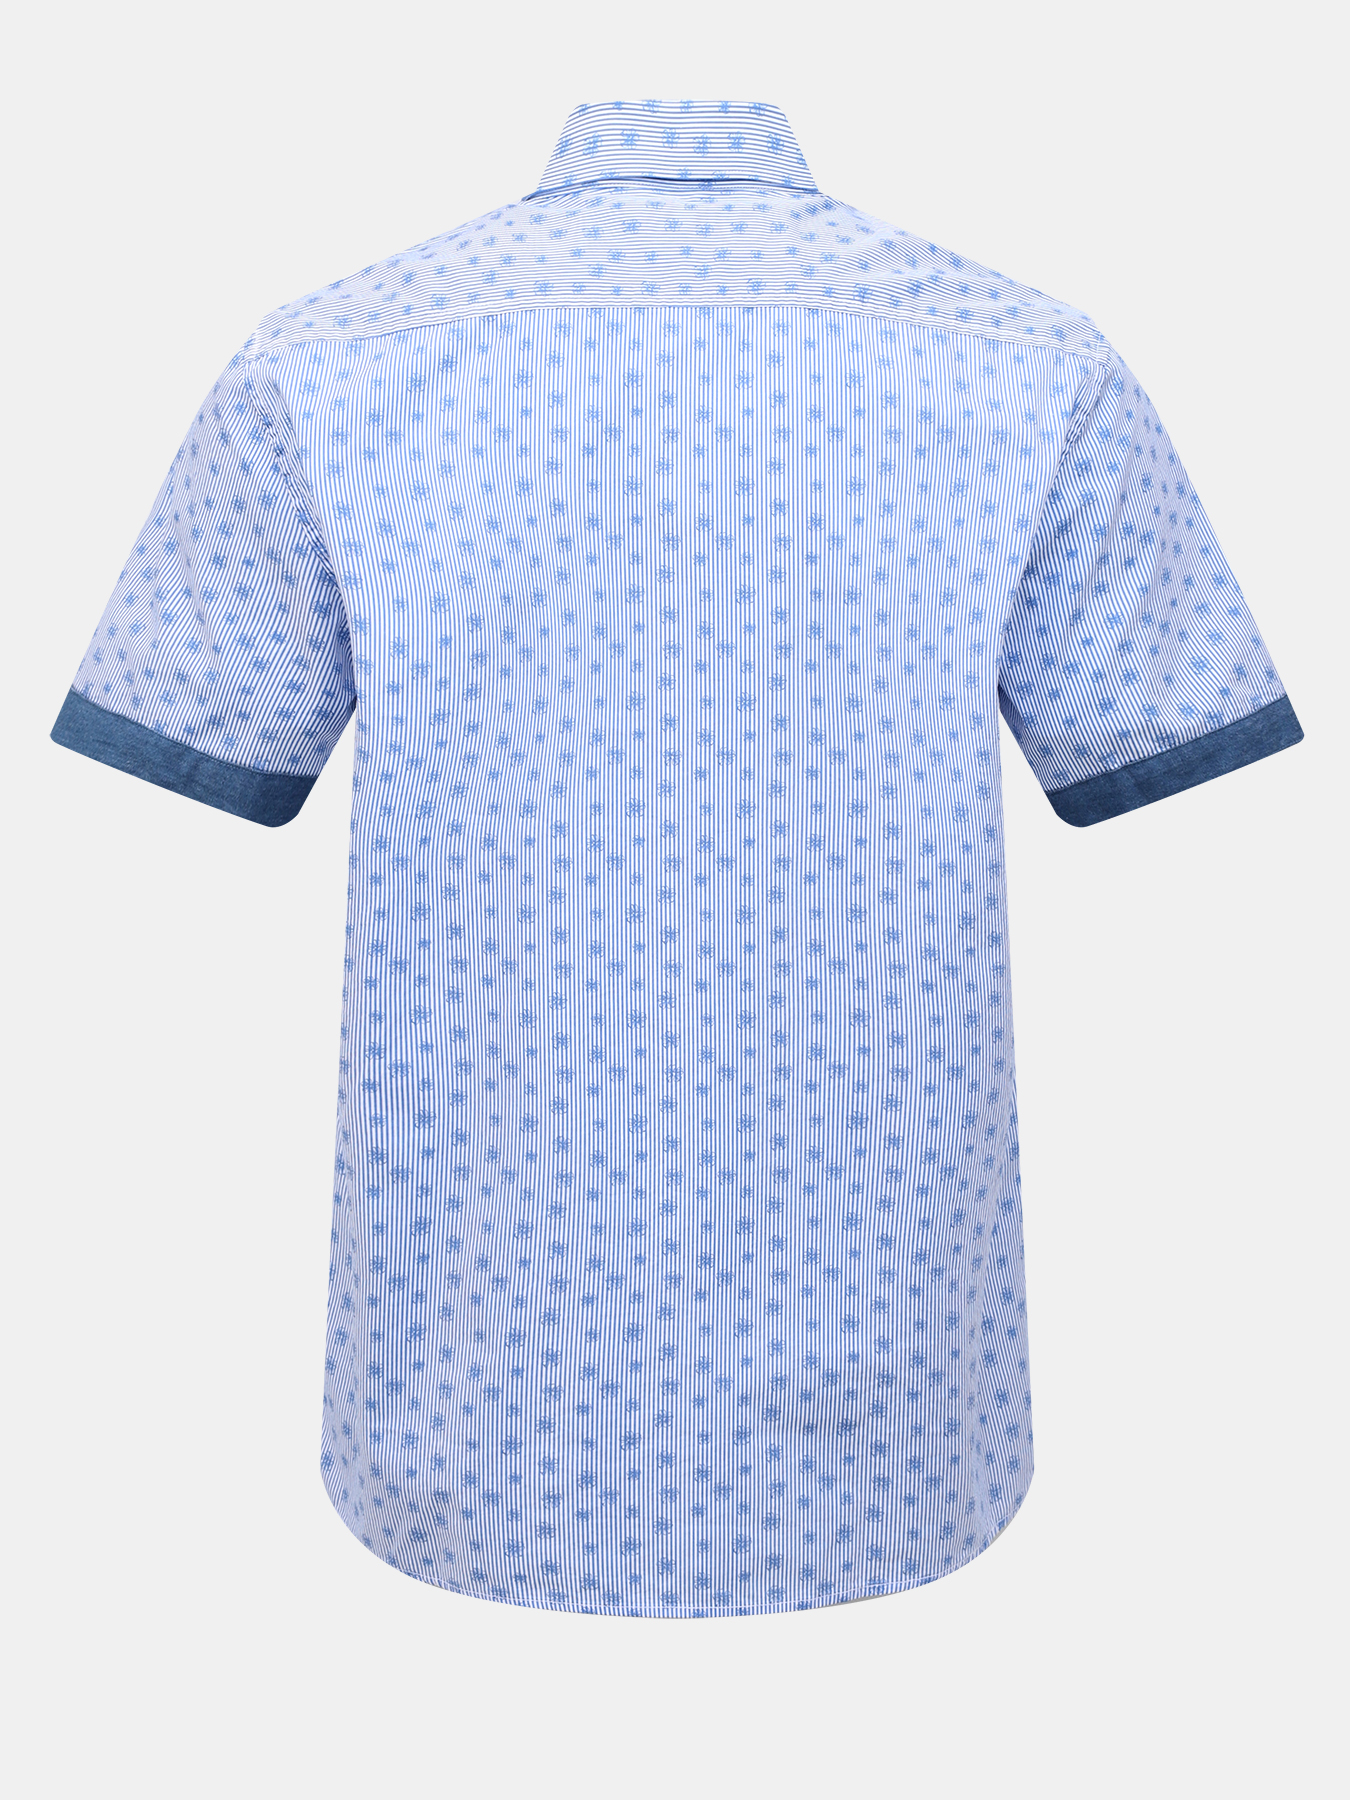 Рубашка Ritter Jeans 373501-025, цвет голубой, размер 48 - фото 2